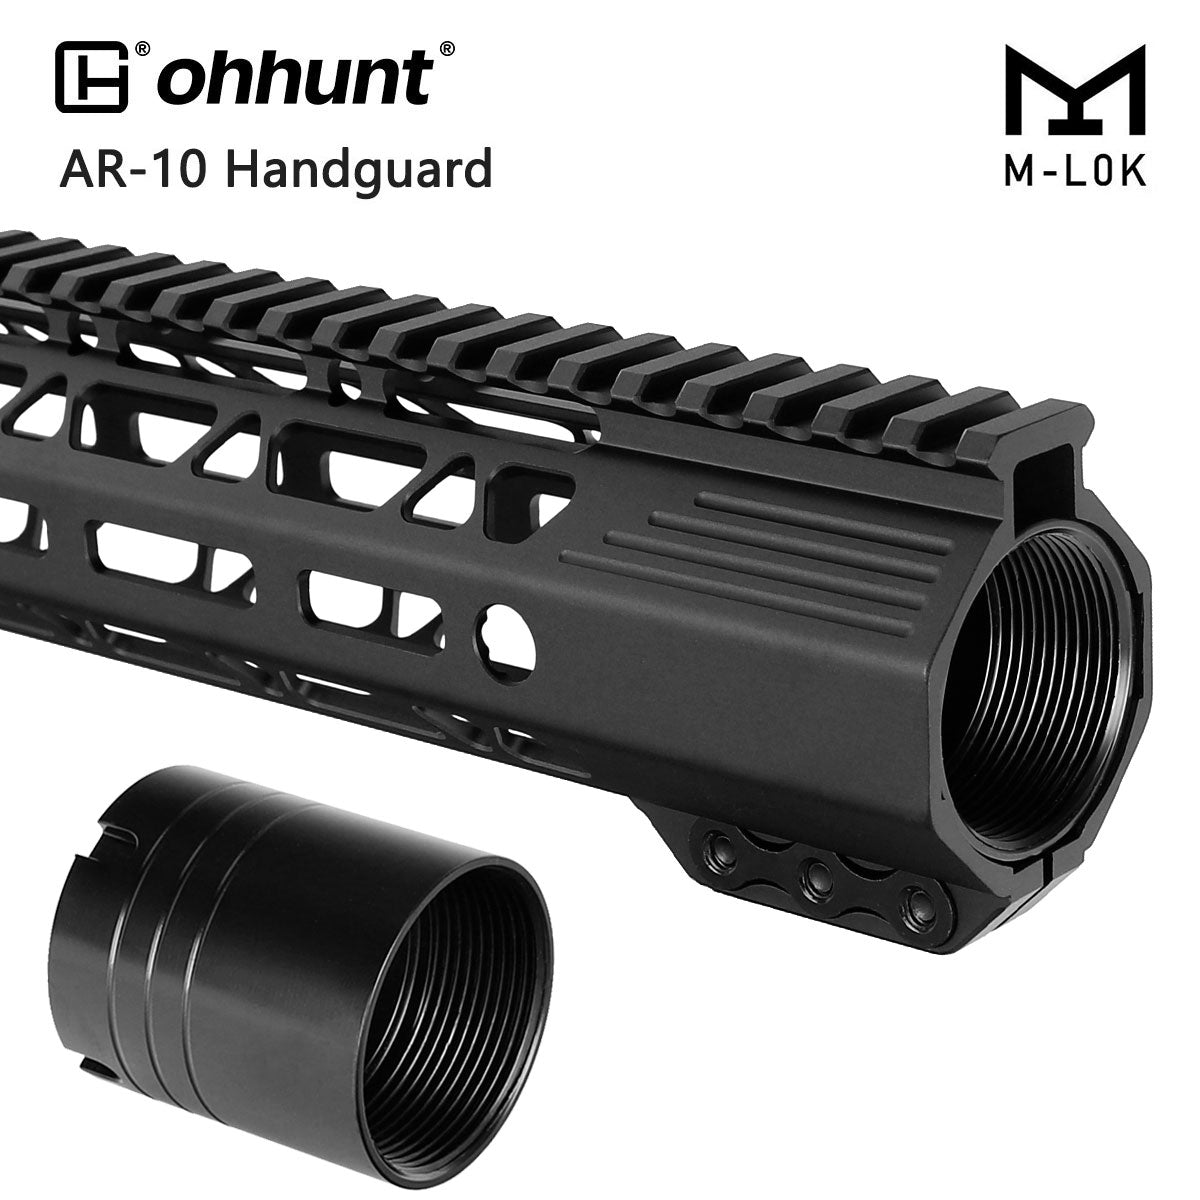 ohhunt® LR308 Handguard Slim Desigh - 17 inch